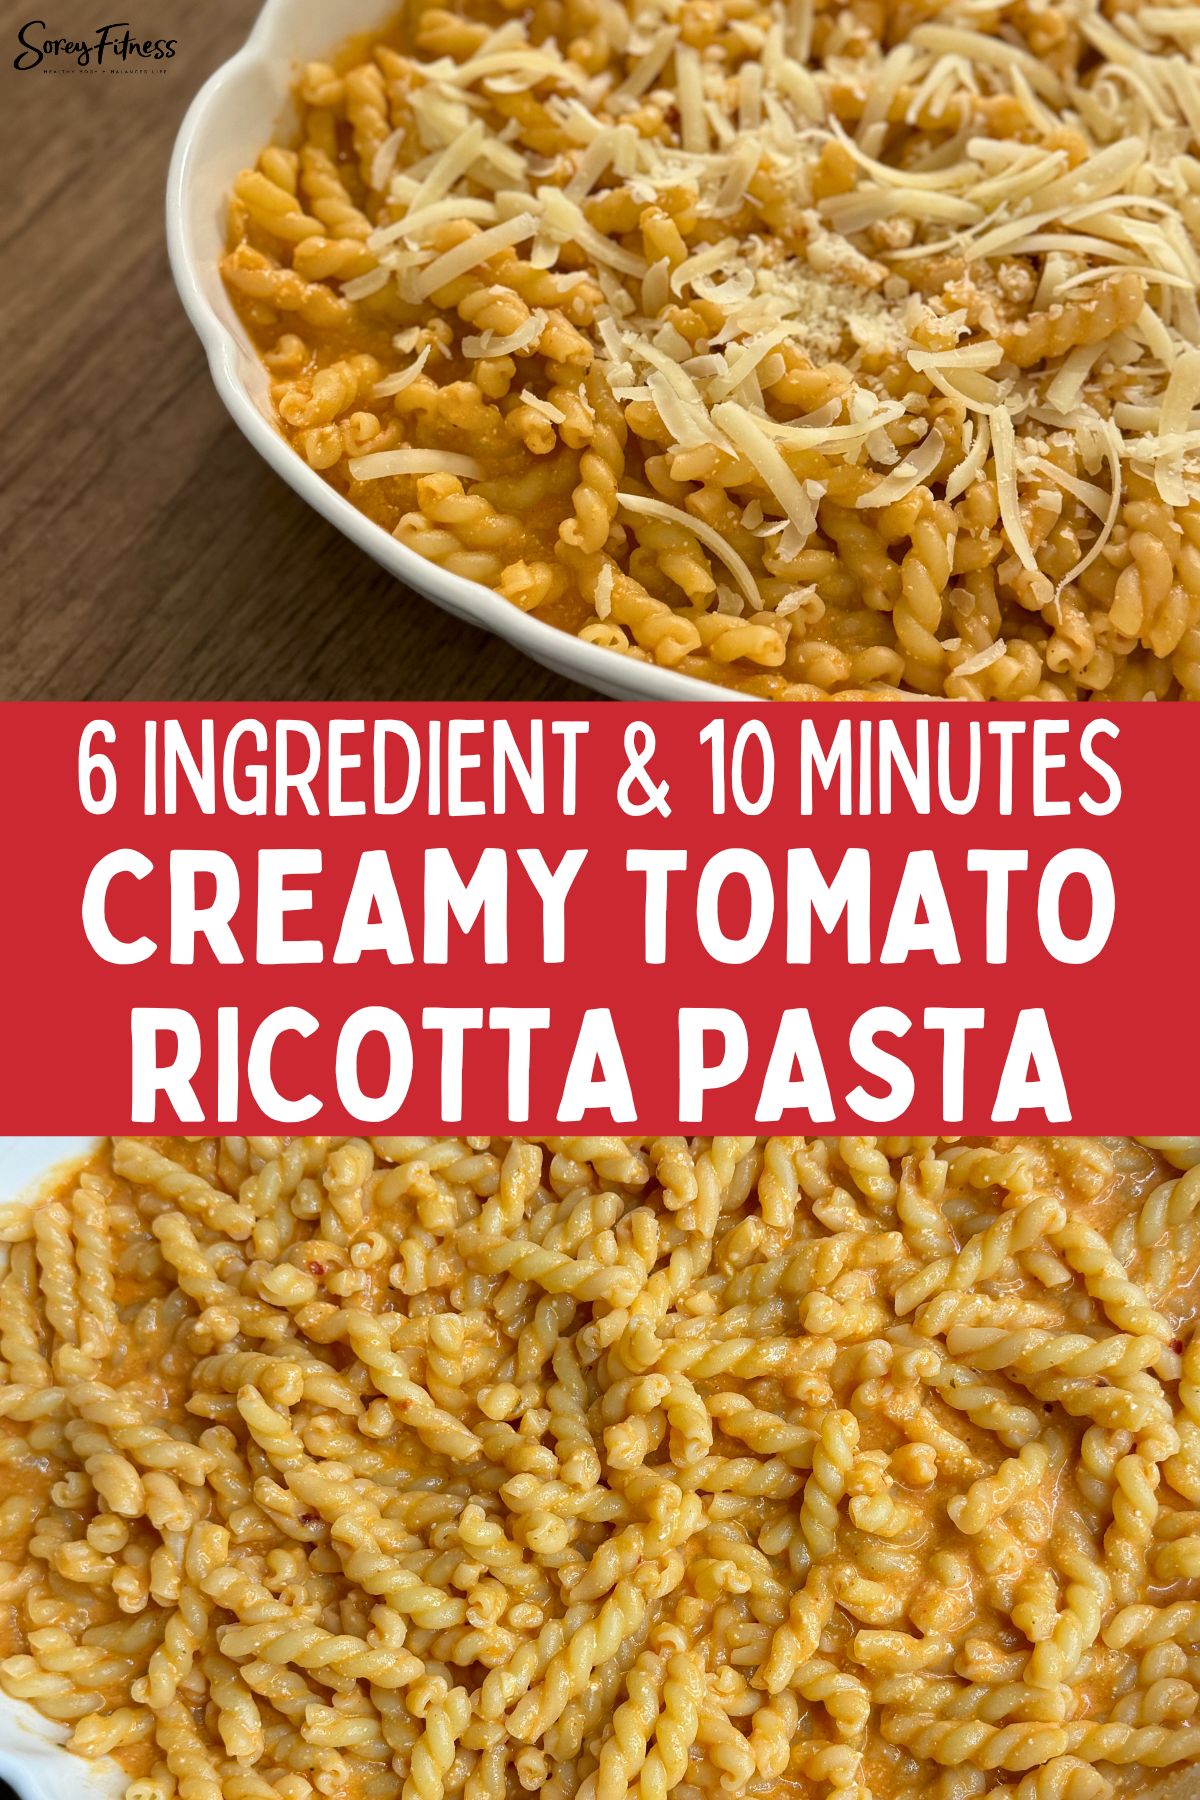 collage of the pasta recipe photos - text overlay says 6 ingredient & 10 minutes creamy tomato ricotta pasta